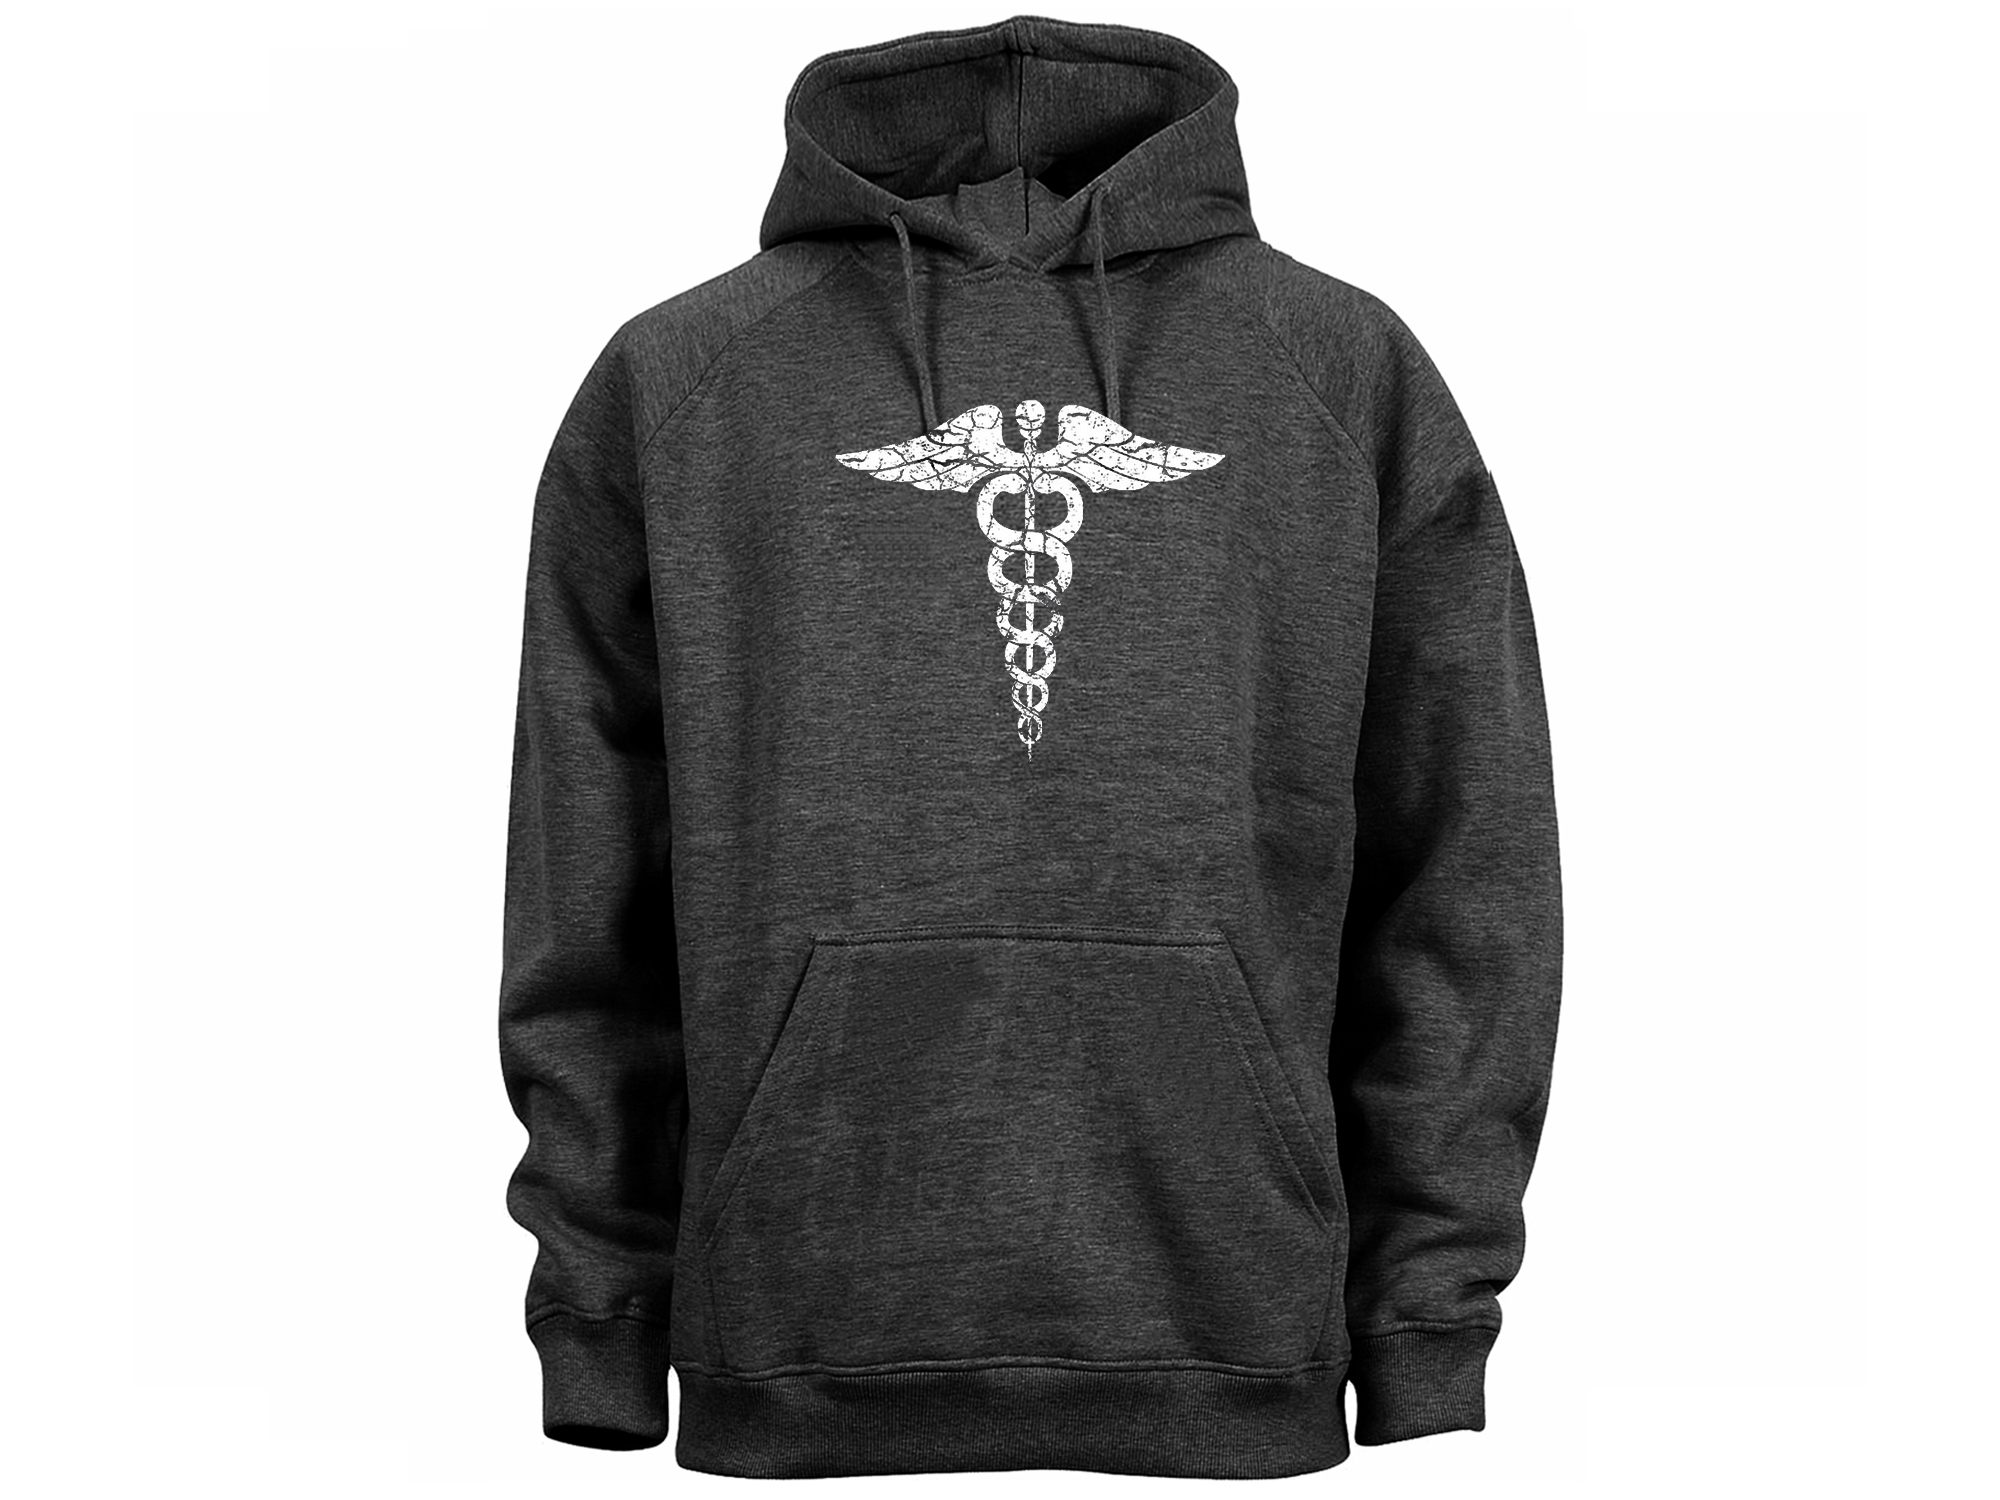 Paramedic Nurse medic sweatshirt gray hoodie 2